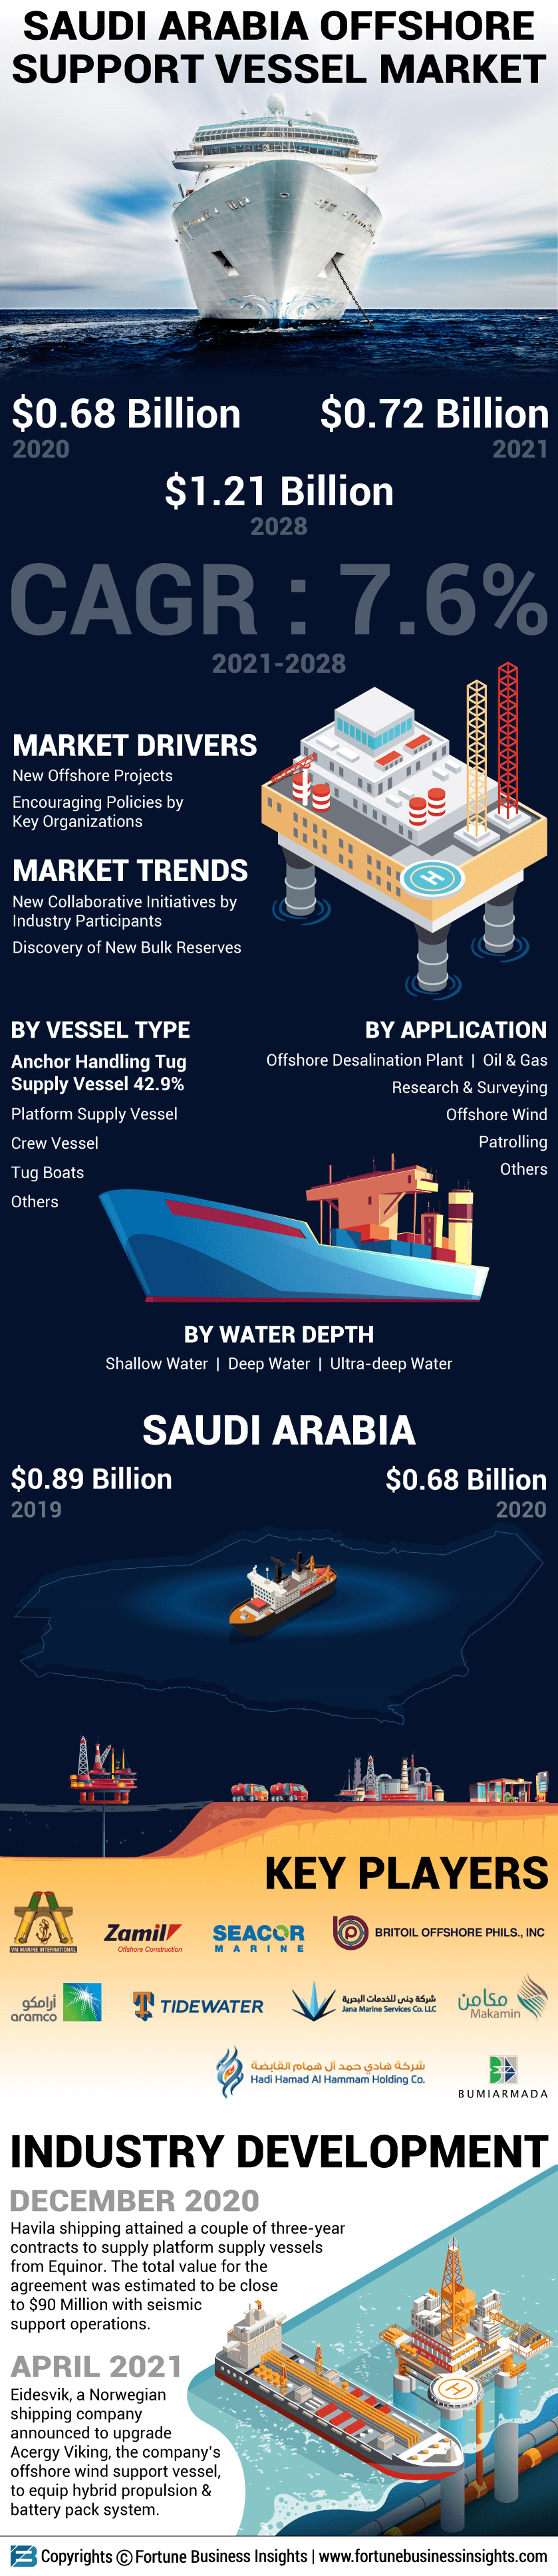 Saudi Arabia Offshore Support Vessel (OSV) Market 